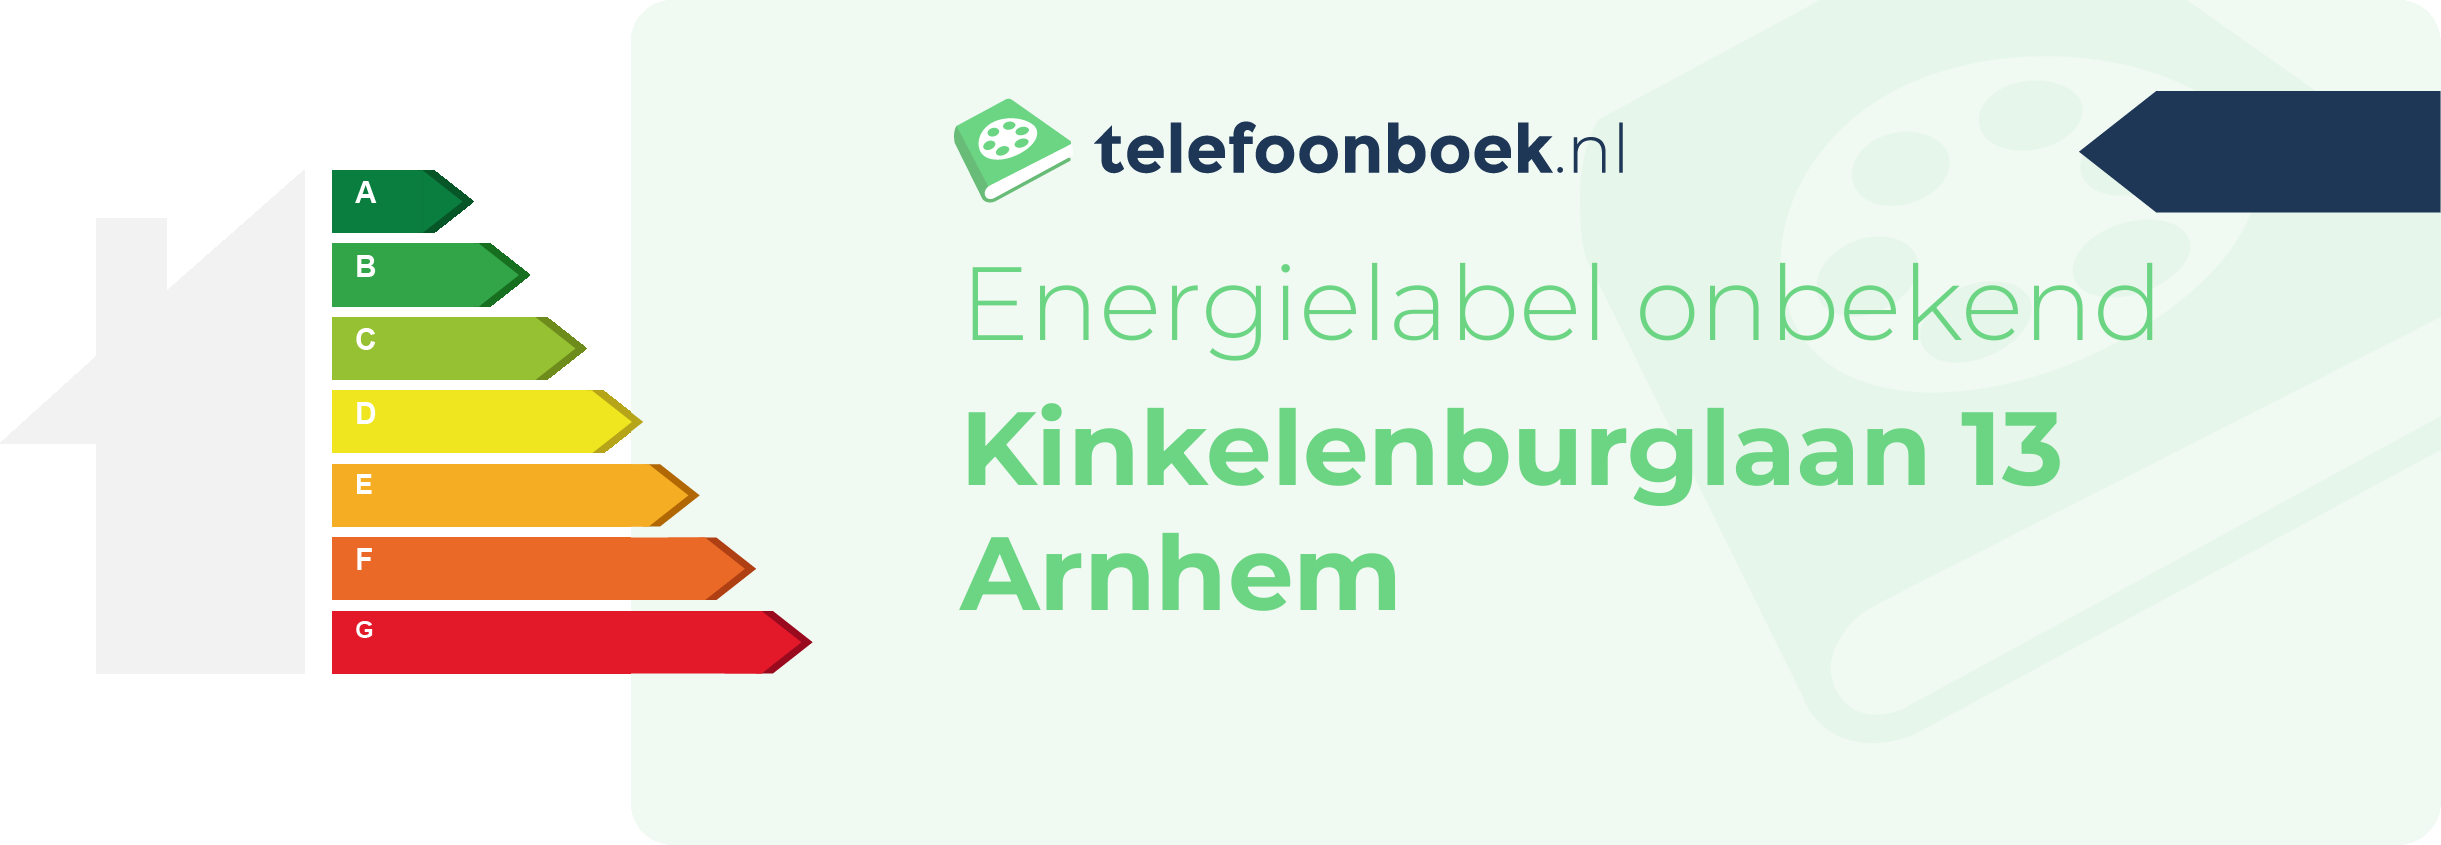 Energielabel Kinkelenburglaan 13 Arnhem